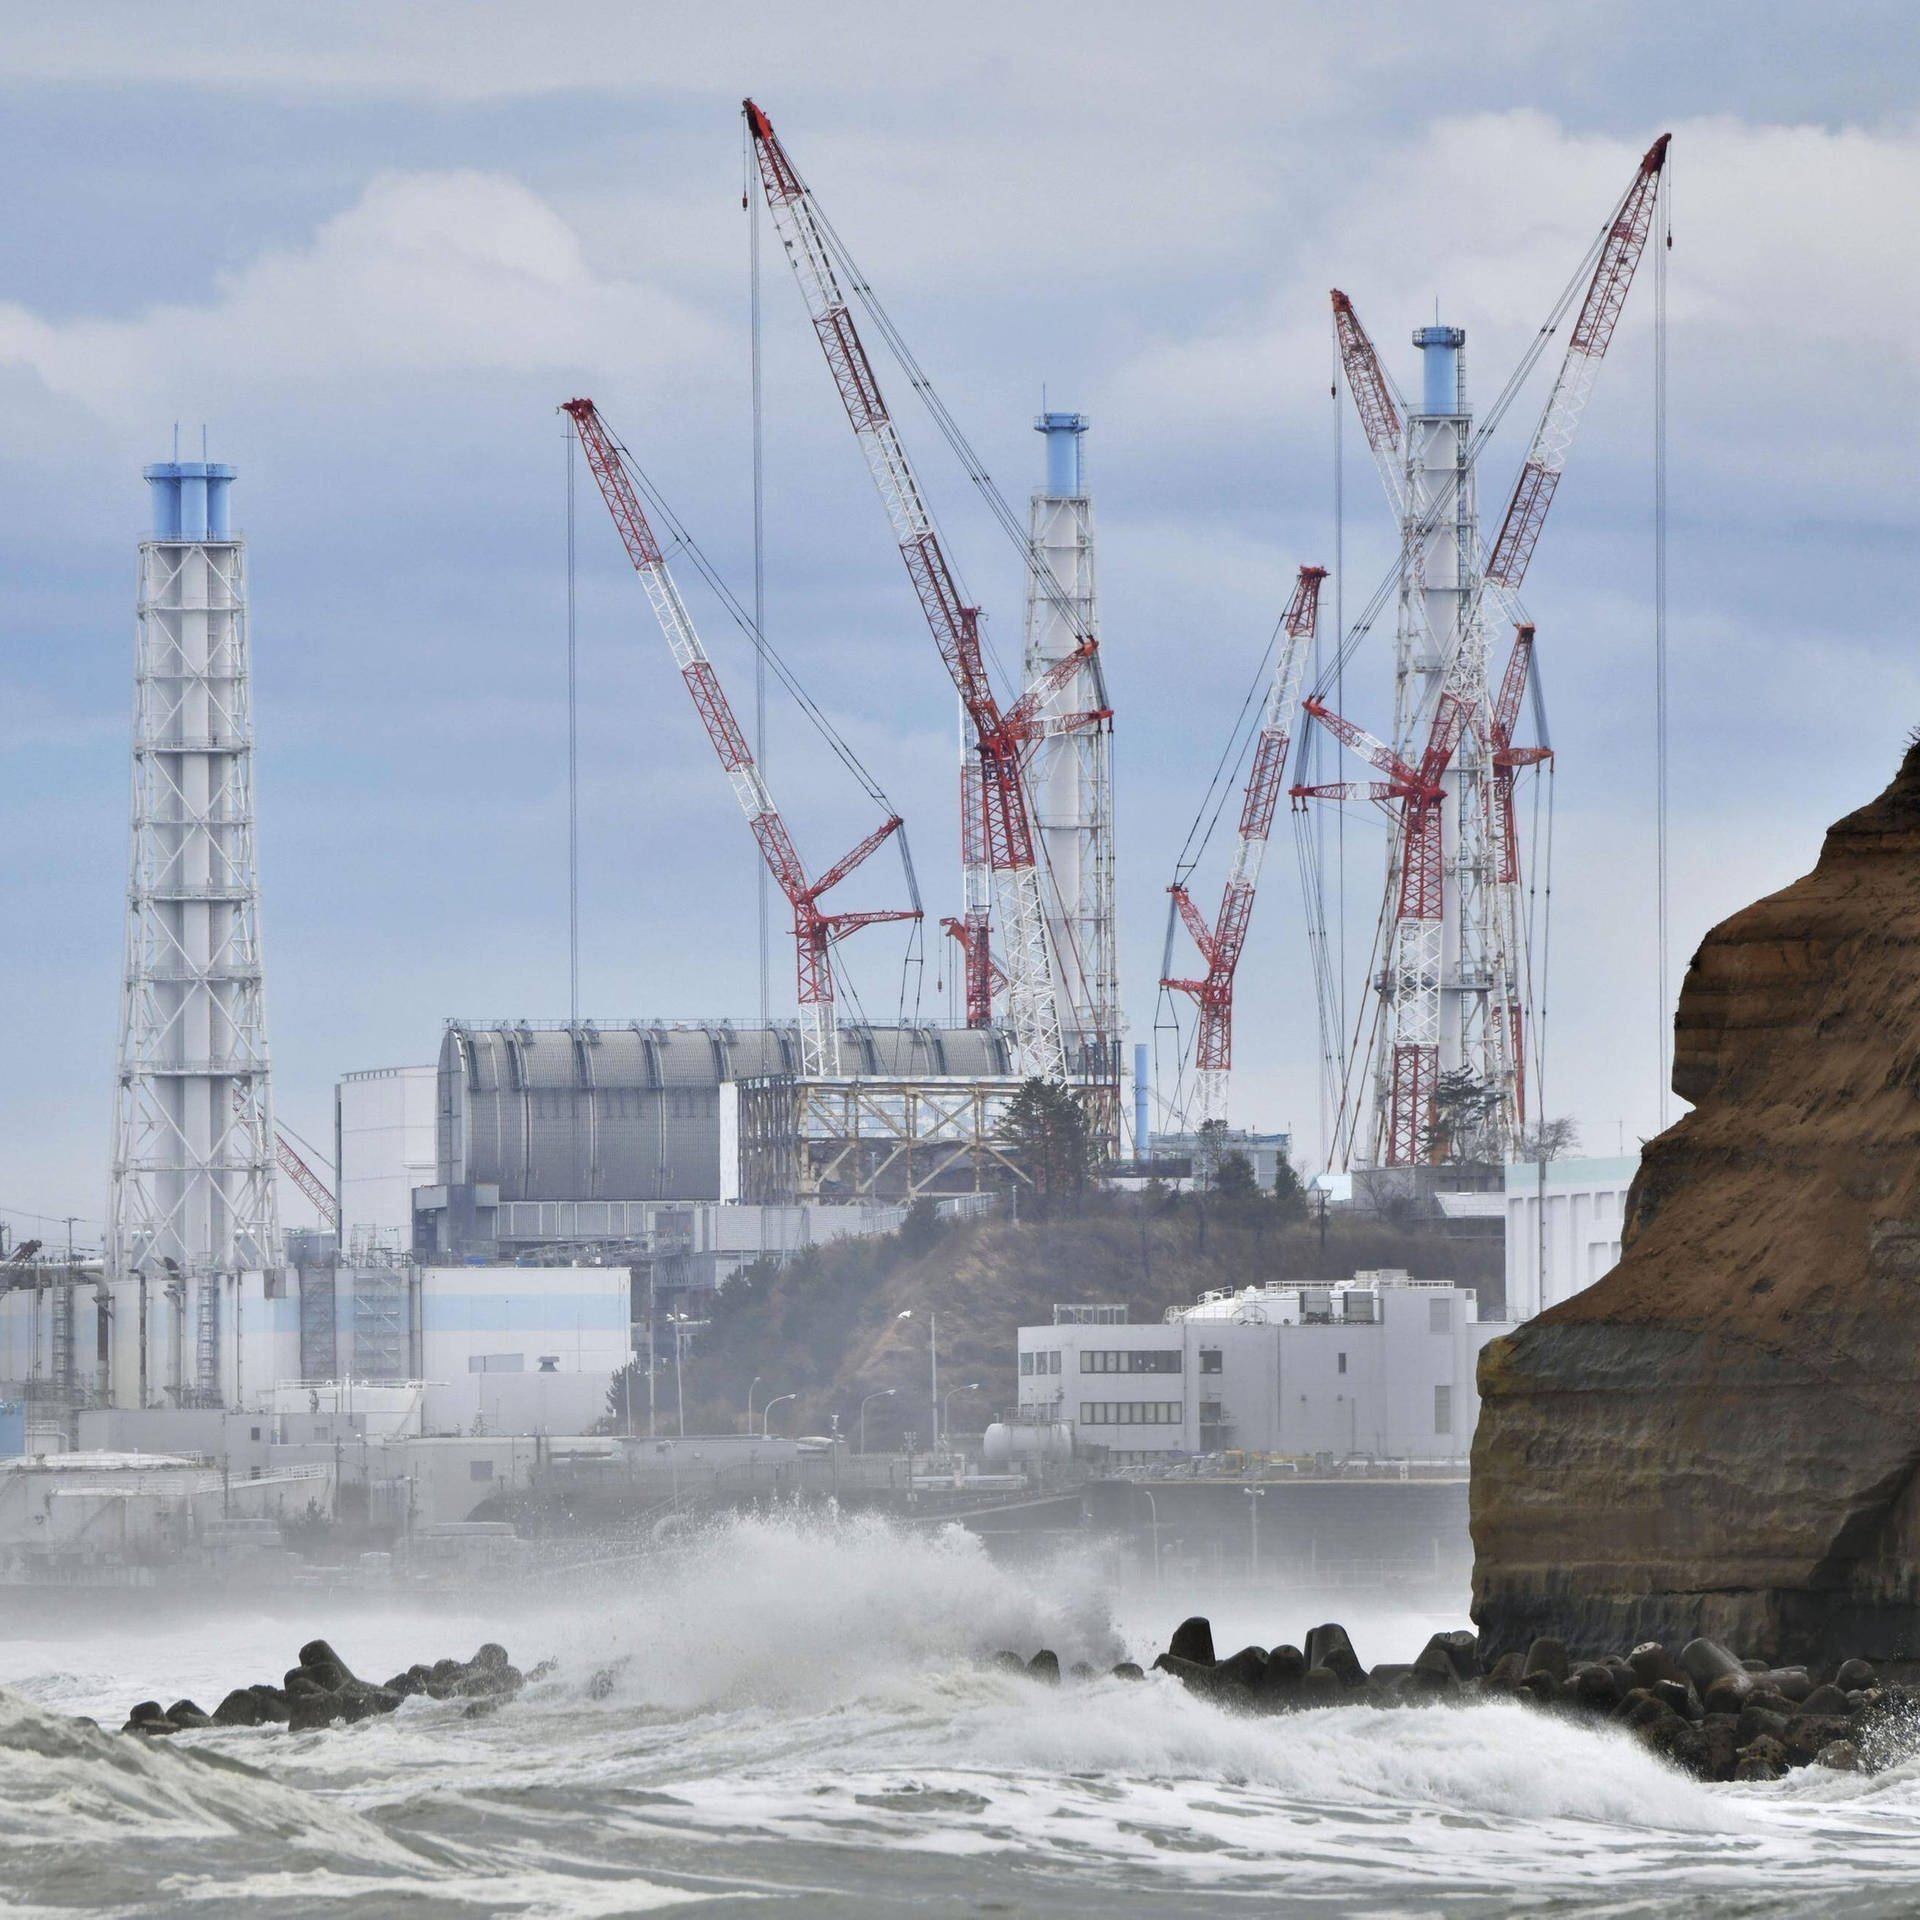 Atomkraft trotz Fukushima – Japan 10 Jahre nach der Reaktorkatastrophe